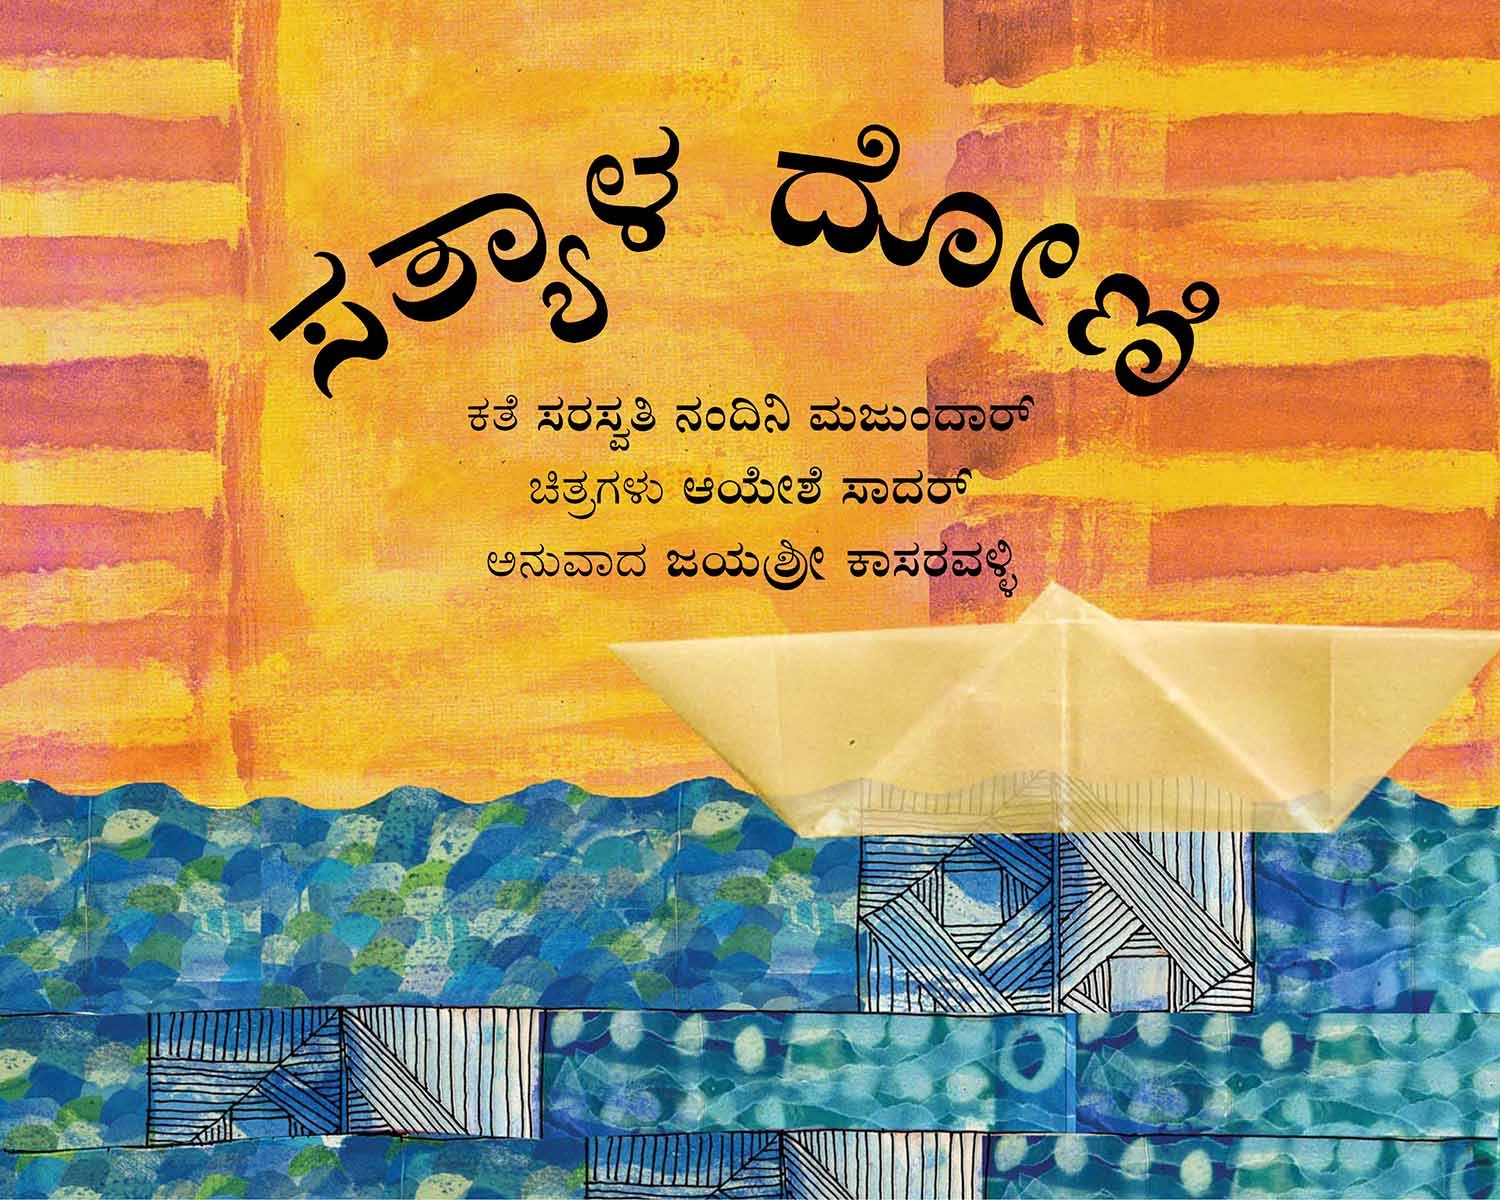 Satya's Boat/Satyala Doni (Kannada)